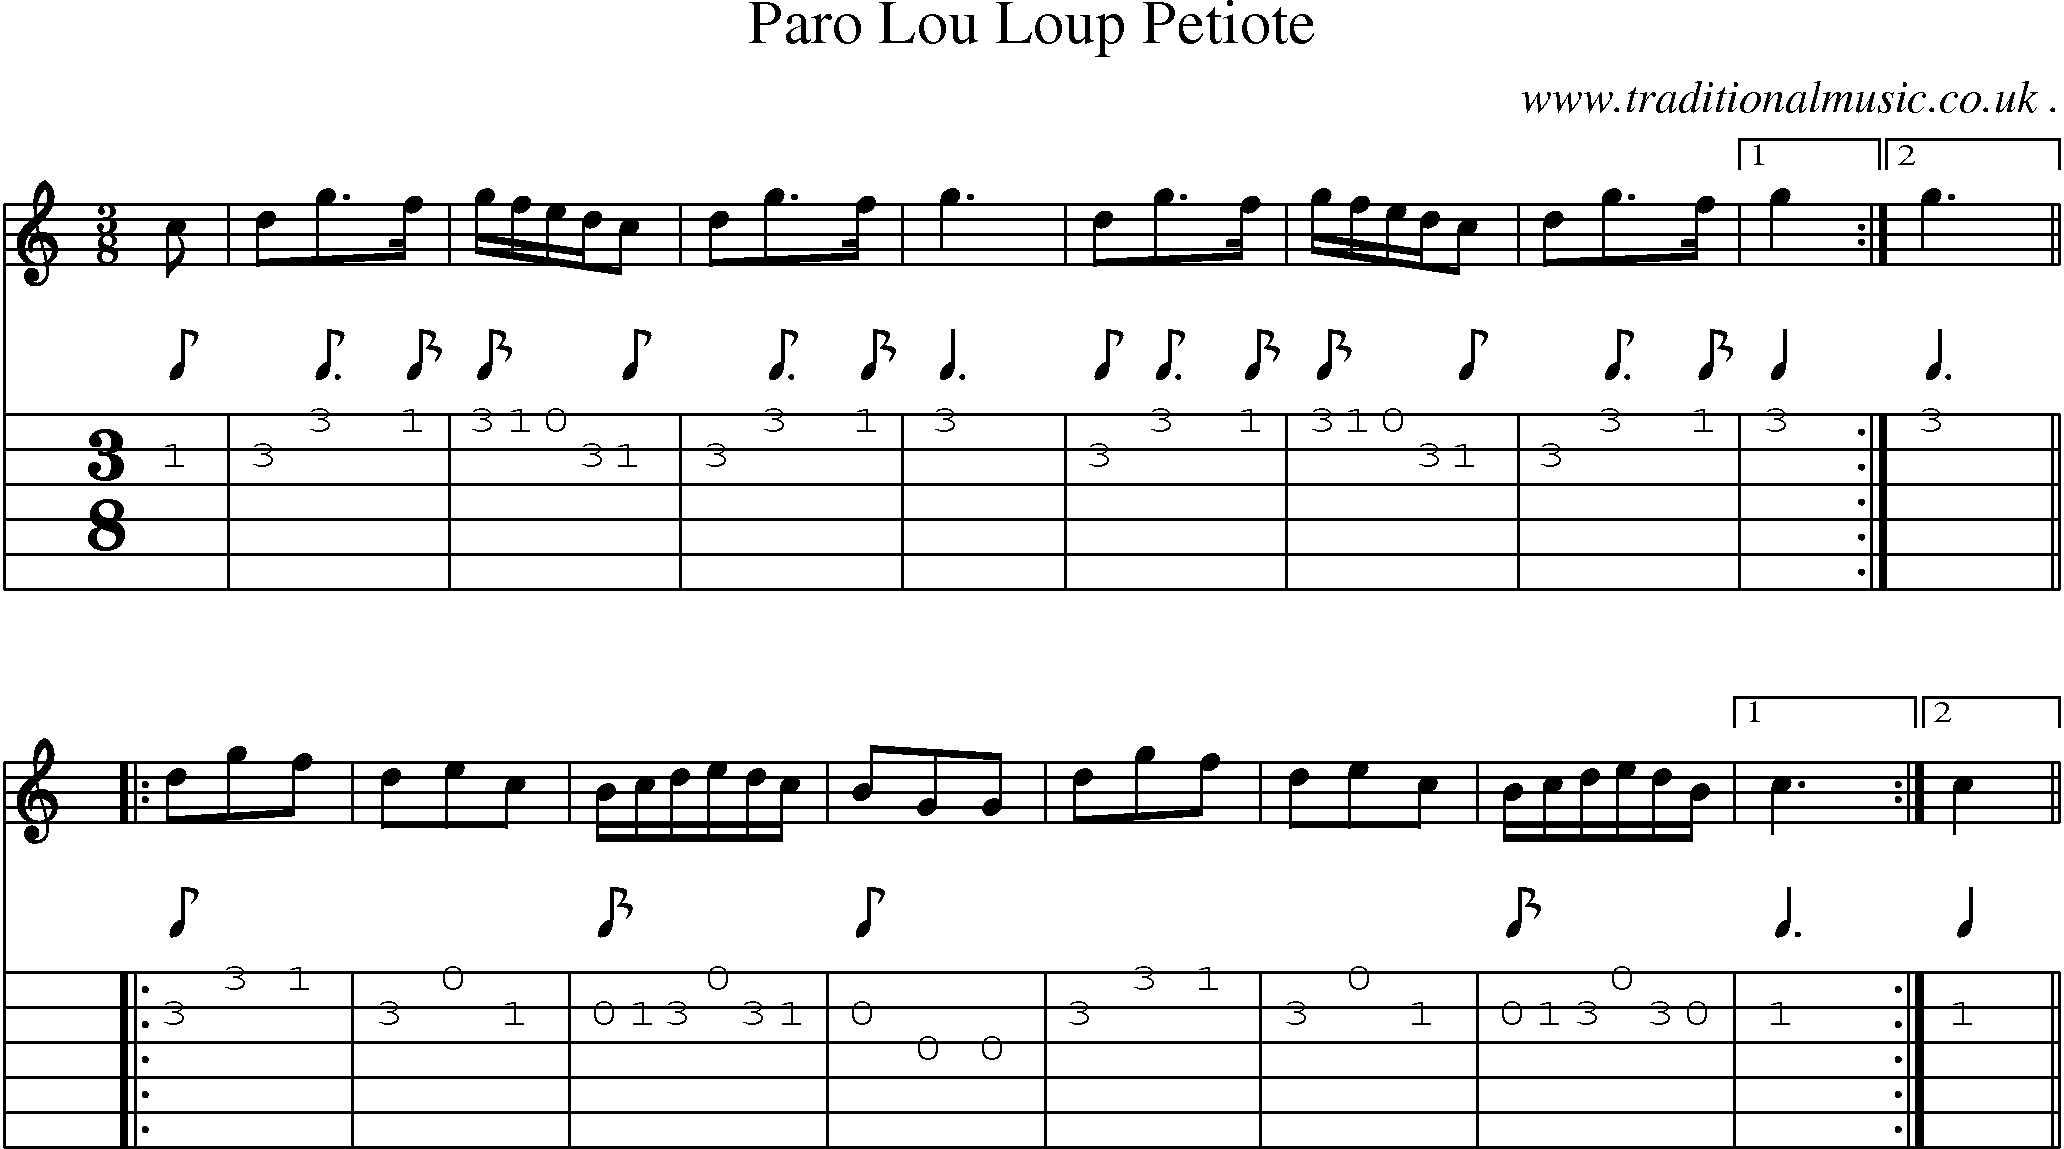 Sheet-Music and Guitar Tabs for Paro Lou Loup Petiote